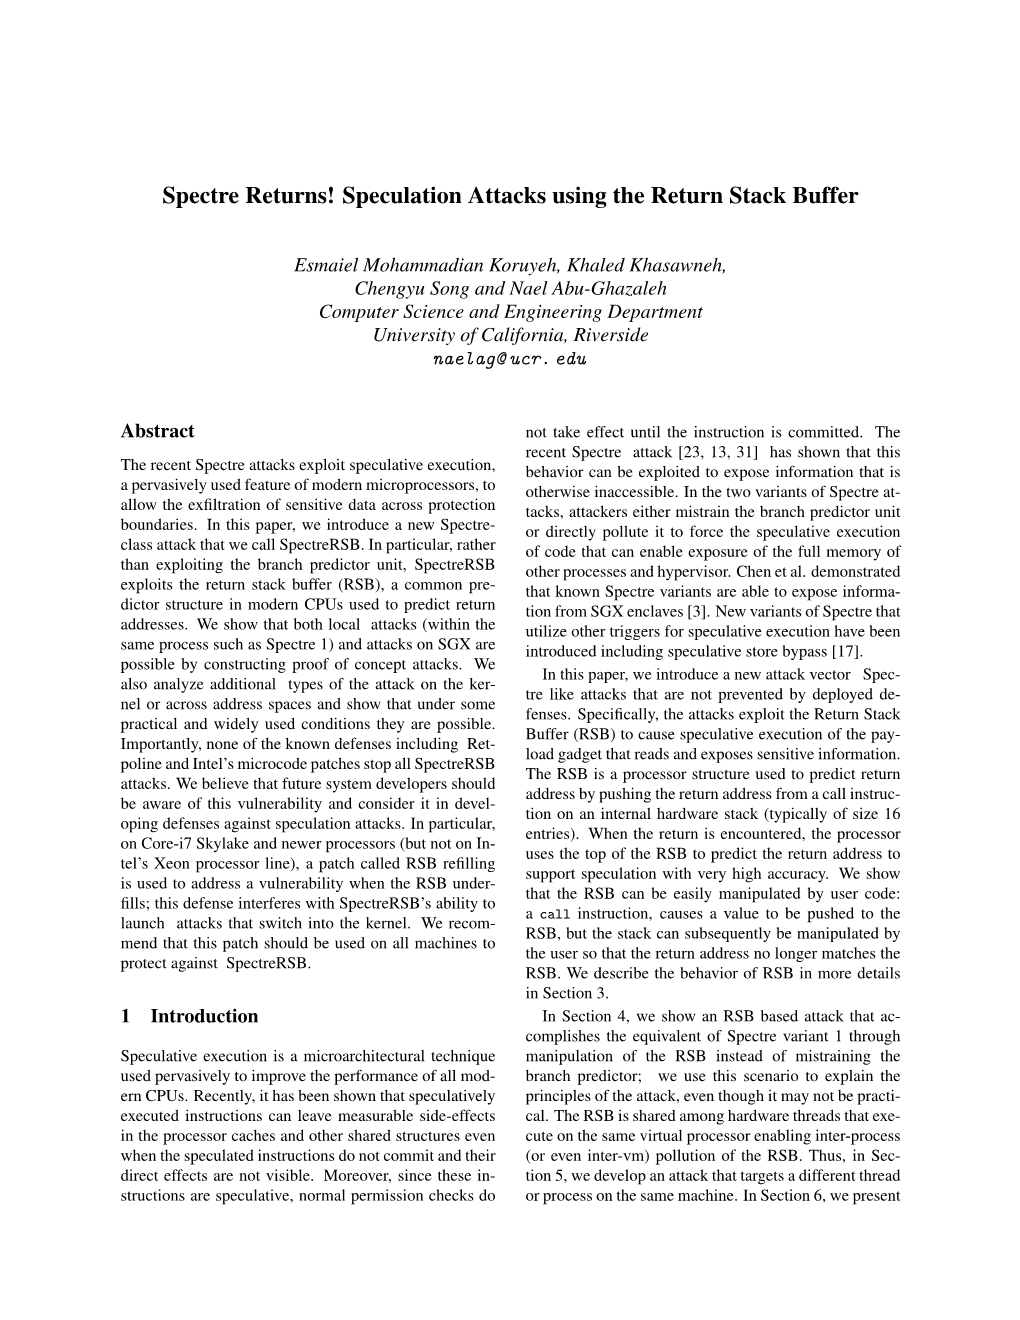 Spectre Returns! Speculation Attacks Using the Return Stack Buffer